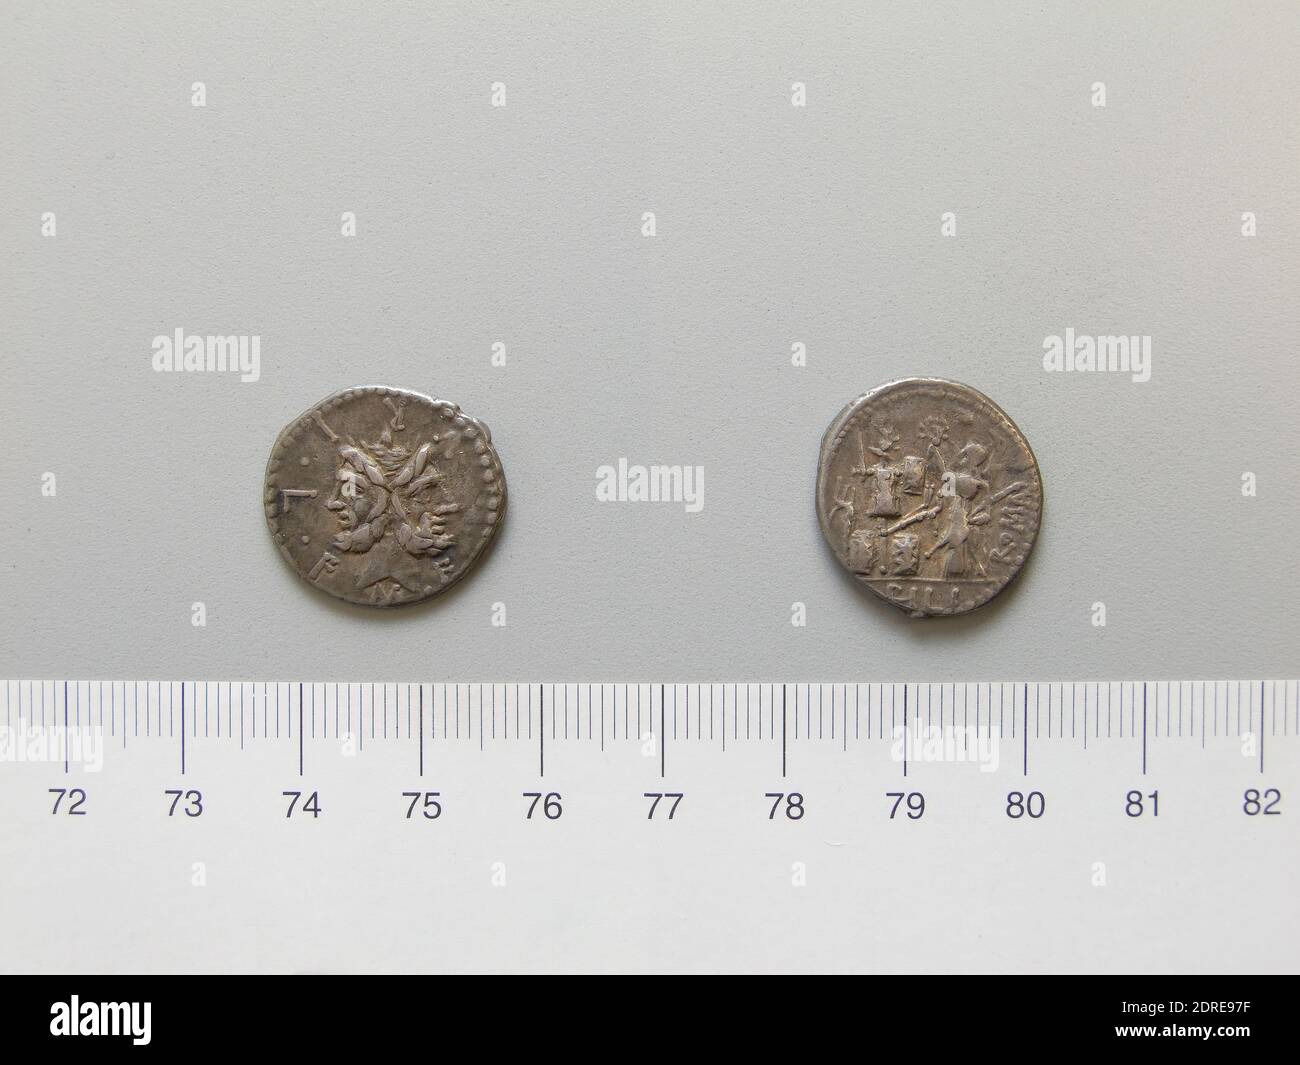 Mint: Rome, Magistrate: M. FOVRI L.F PHILI, Denarius from Rome, 119 B.C., Silver, 3.93 g, 5:00, 20 mm, Made in Rome, Roman Empire, Roman, 2nd century B.C., Numismatics Stock Photo